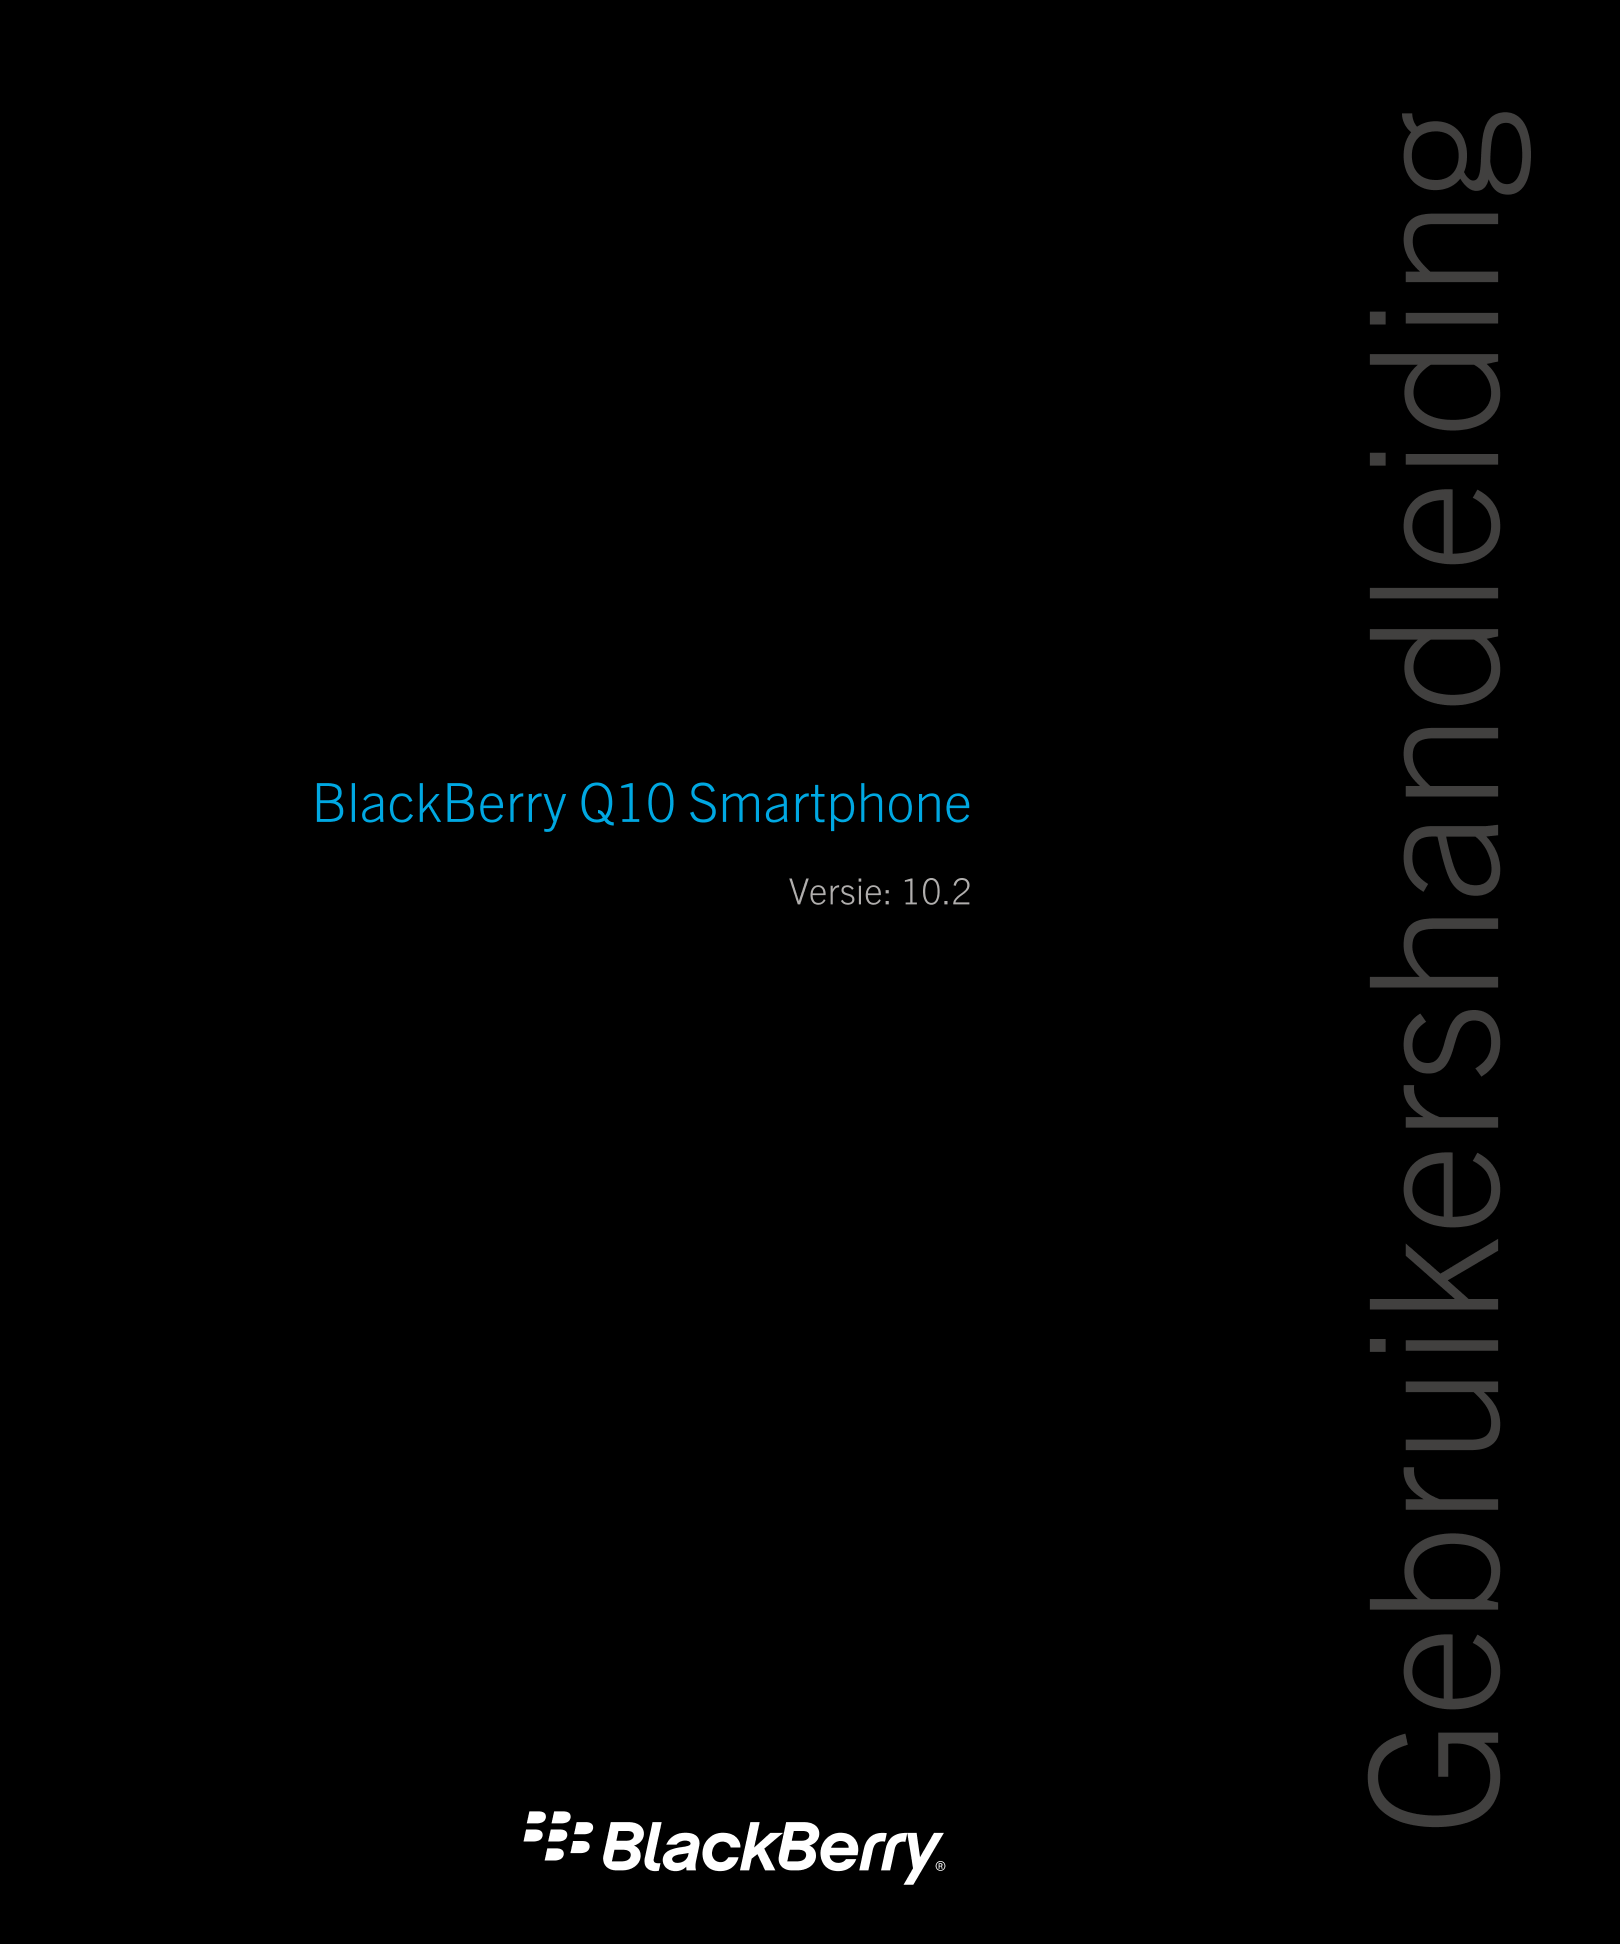 Gebruikershandleiding
BlackBerry Q10 Smartphone
Versie: 10.2